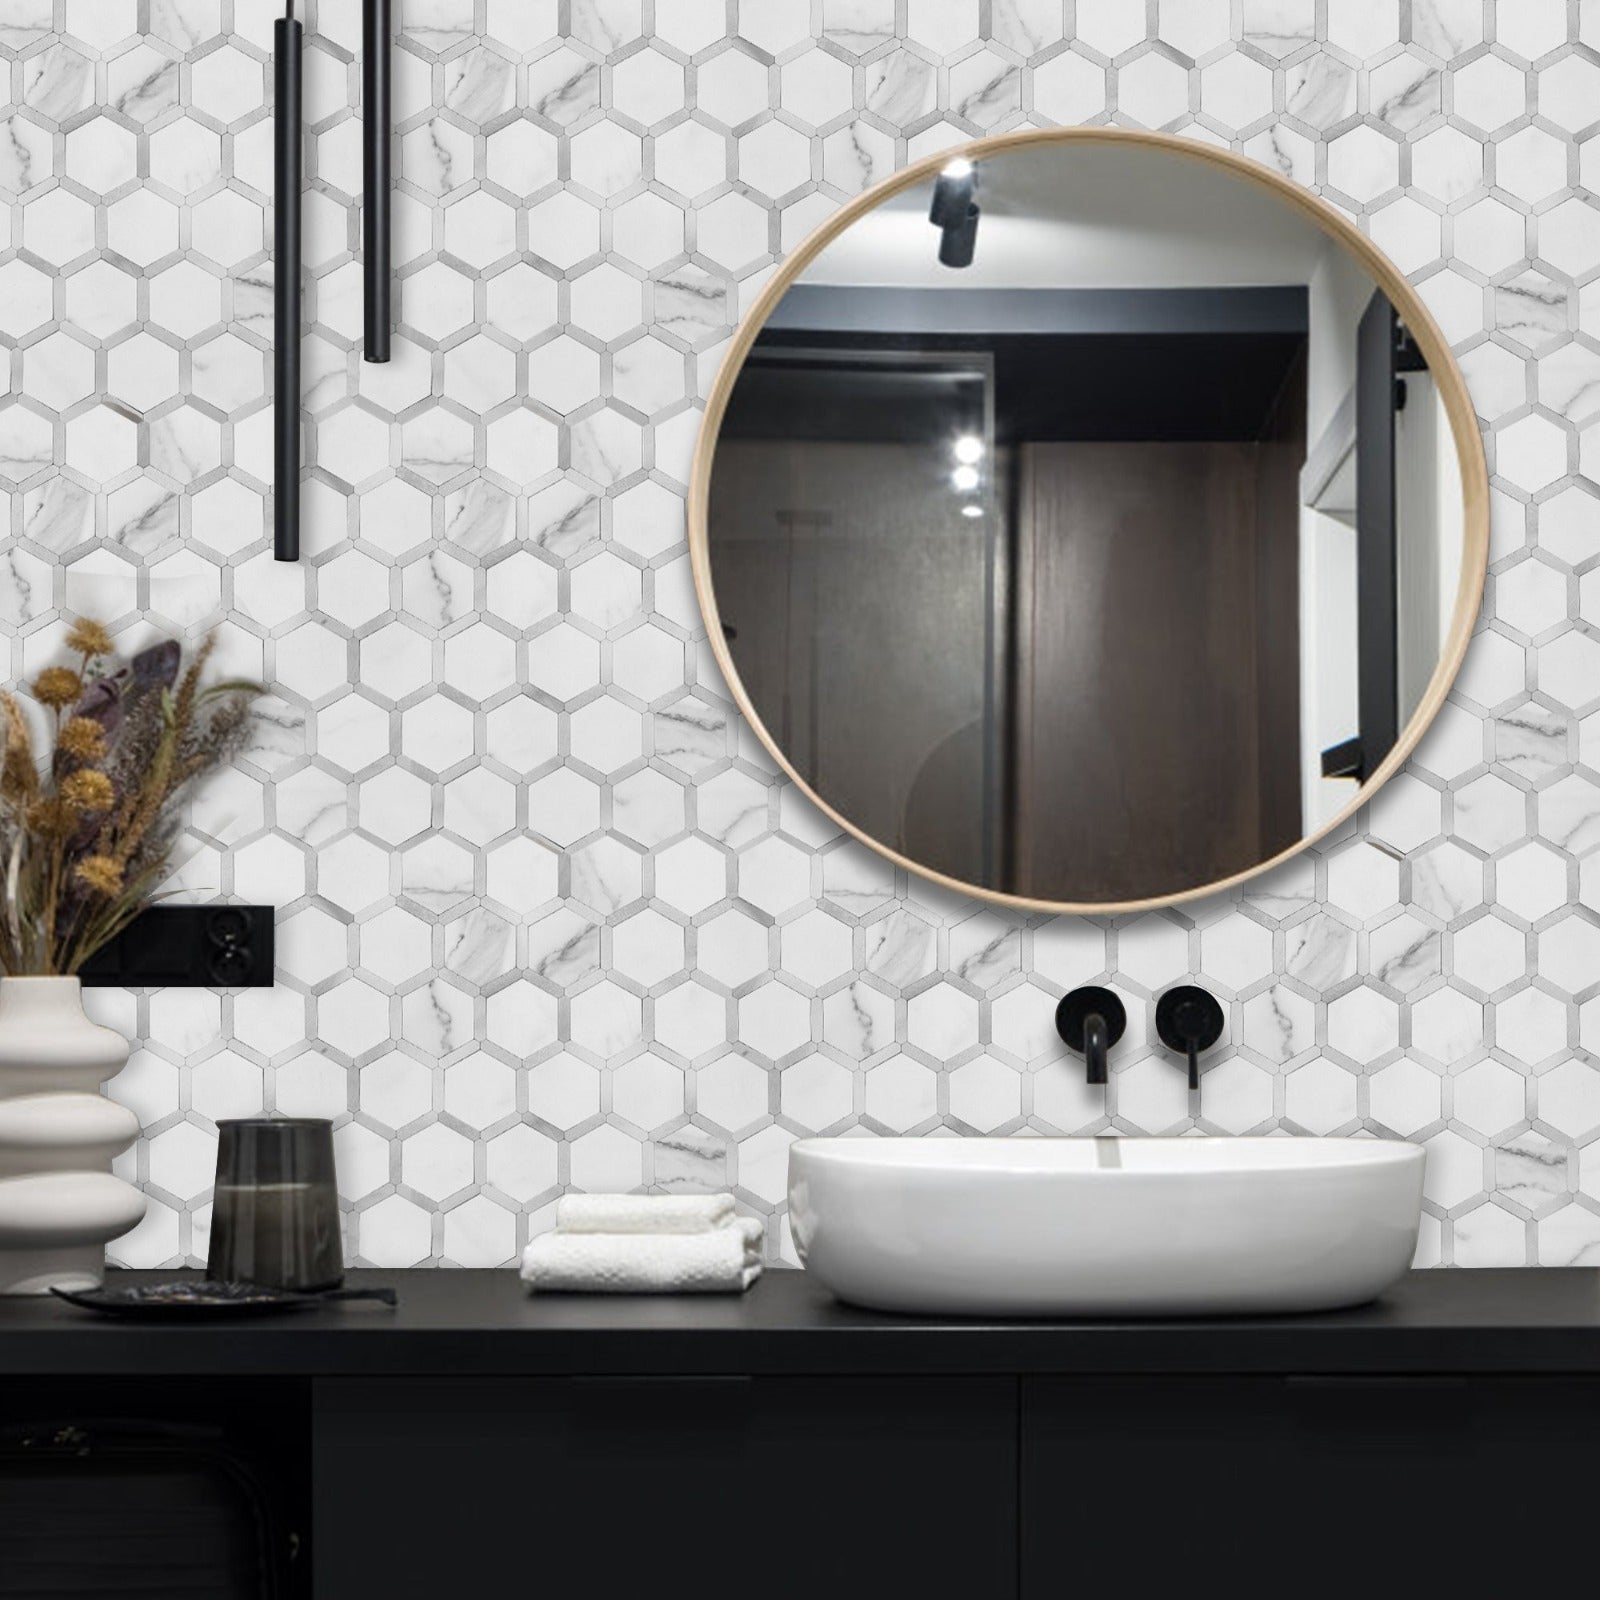 bathroom hexagon backspalsh tiles